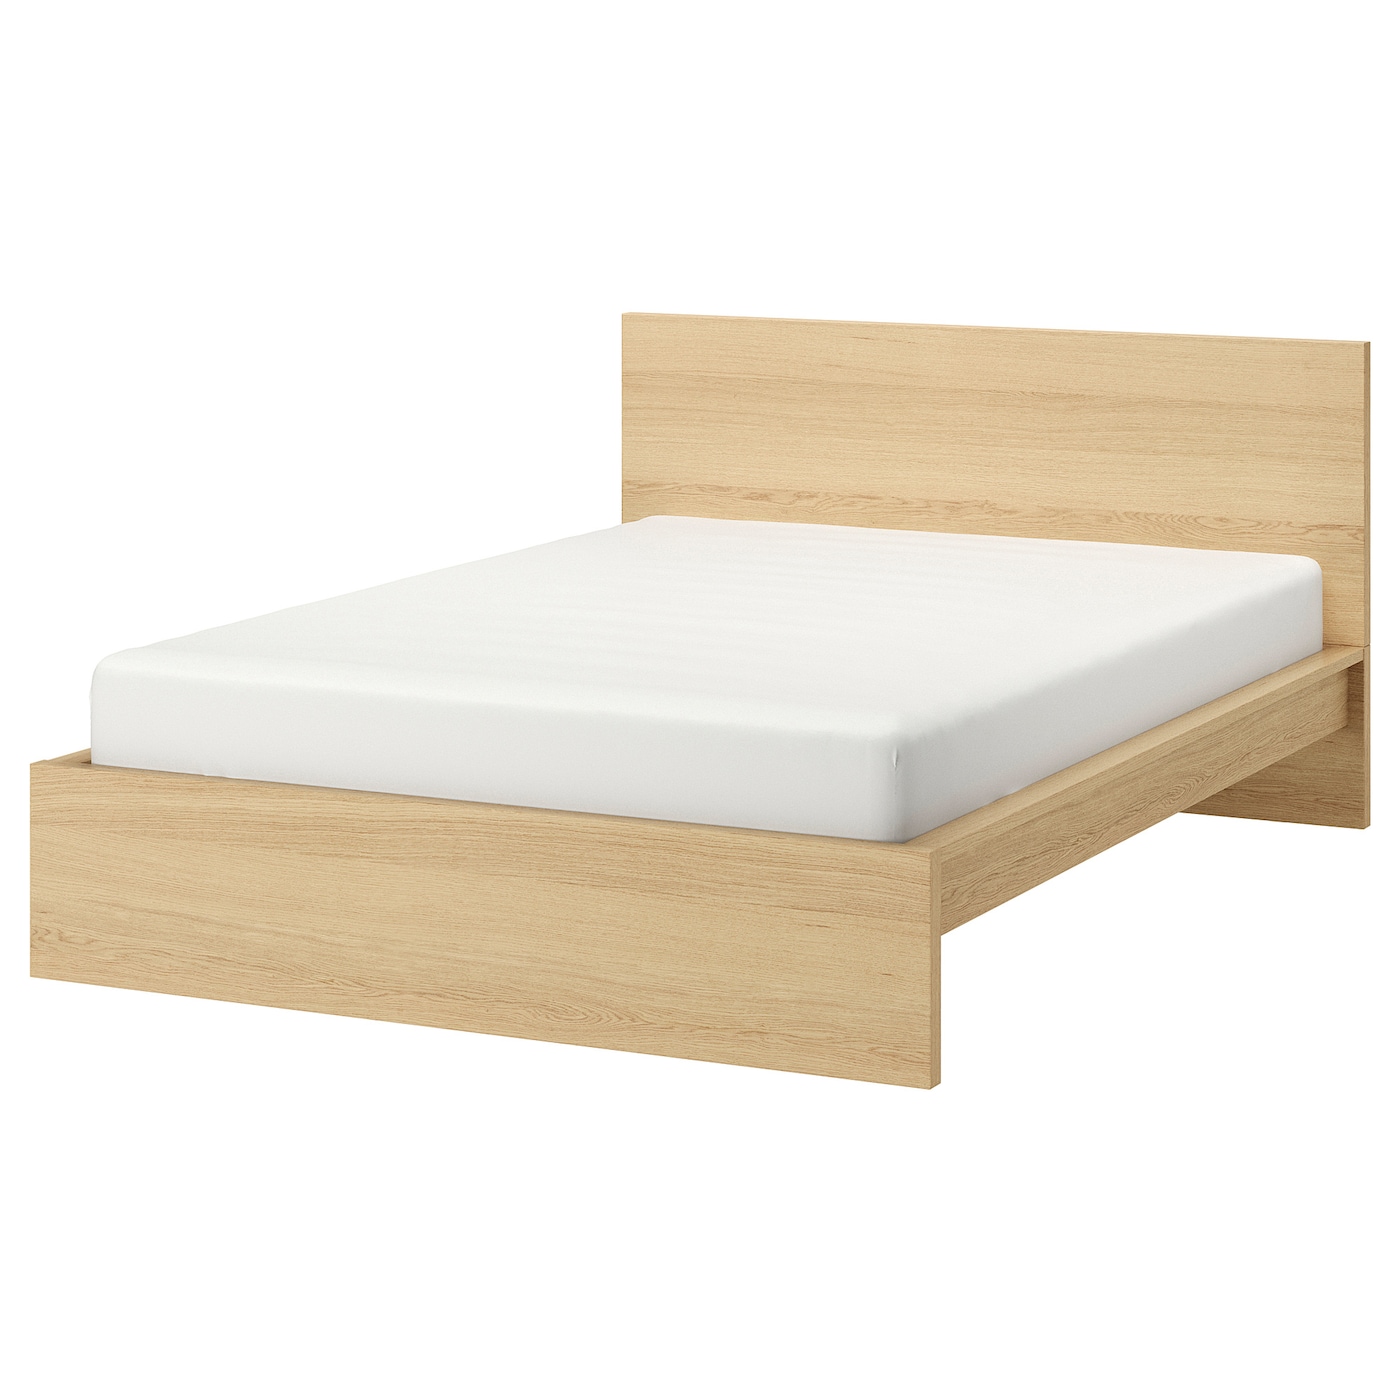 Каркас кровати - IKEA MALM/LUROY/LURÖY, 140x200 см, дубовый шпон, беленый МАЛЬМ/ЛУРОЙ ИКЕА